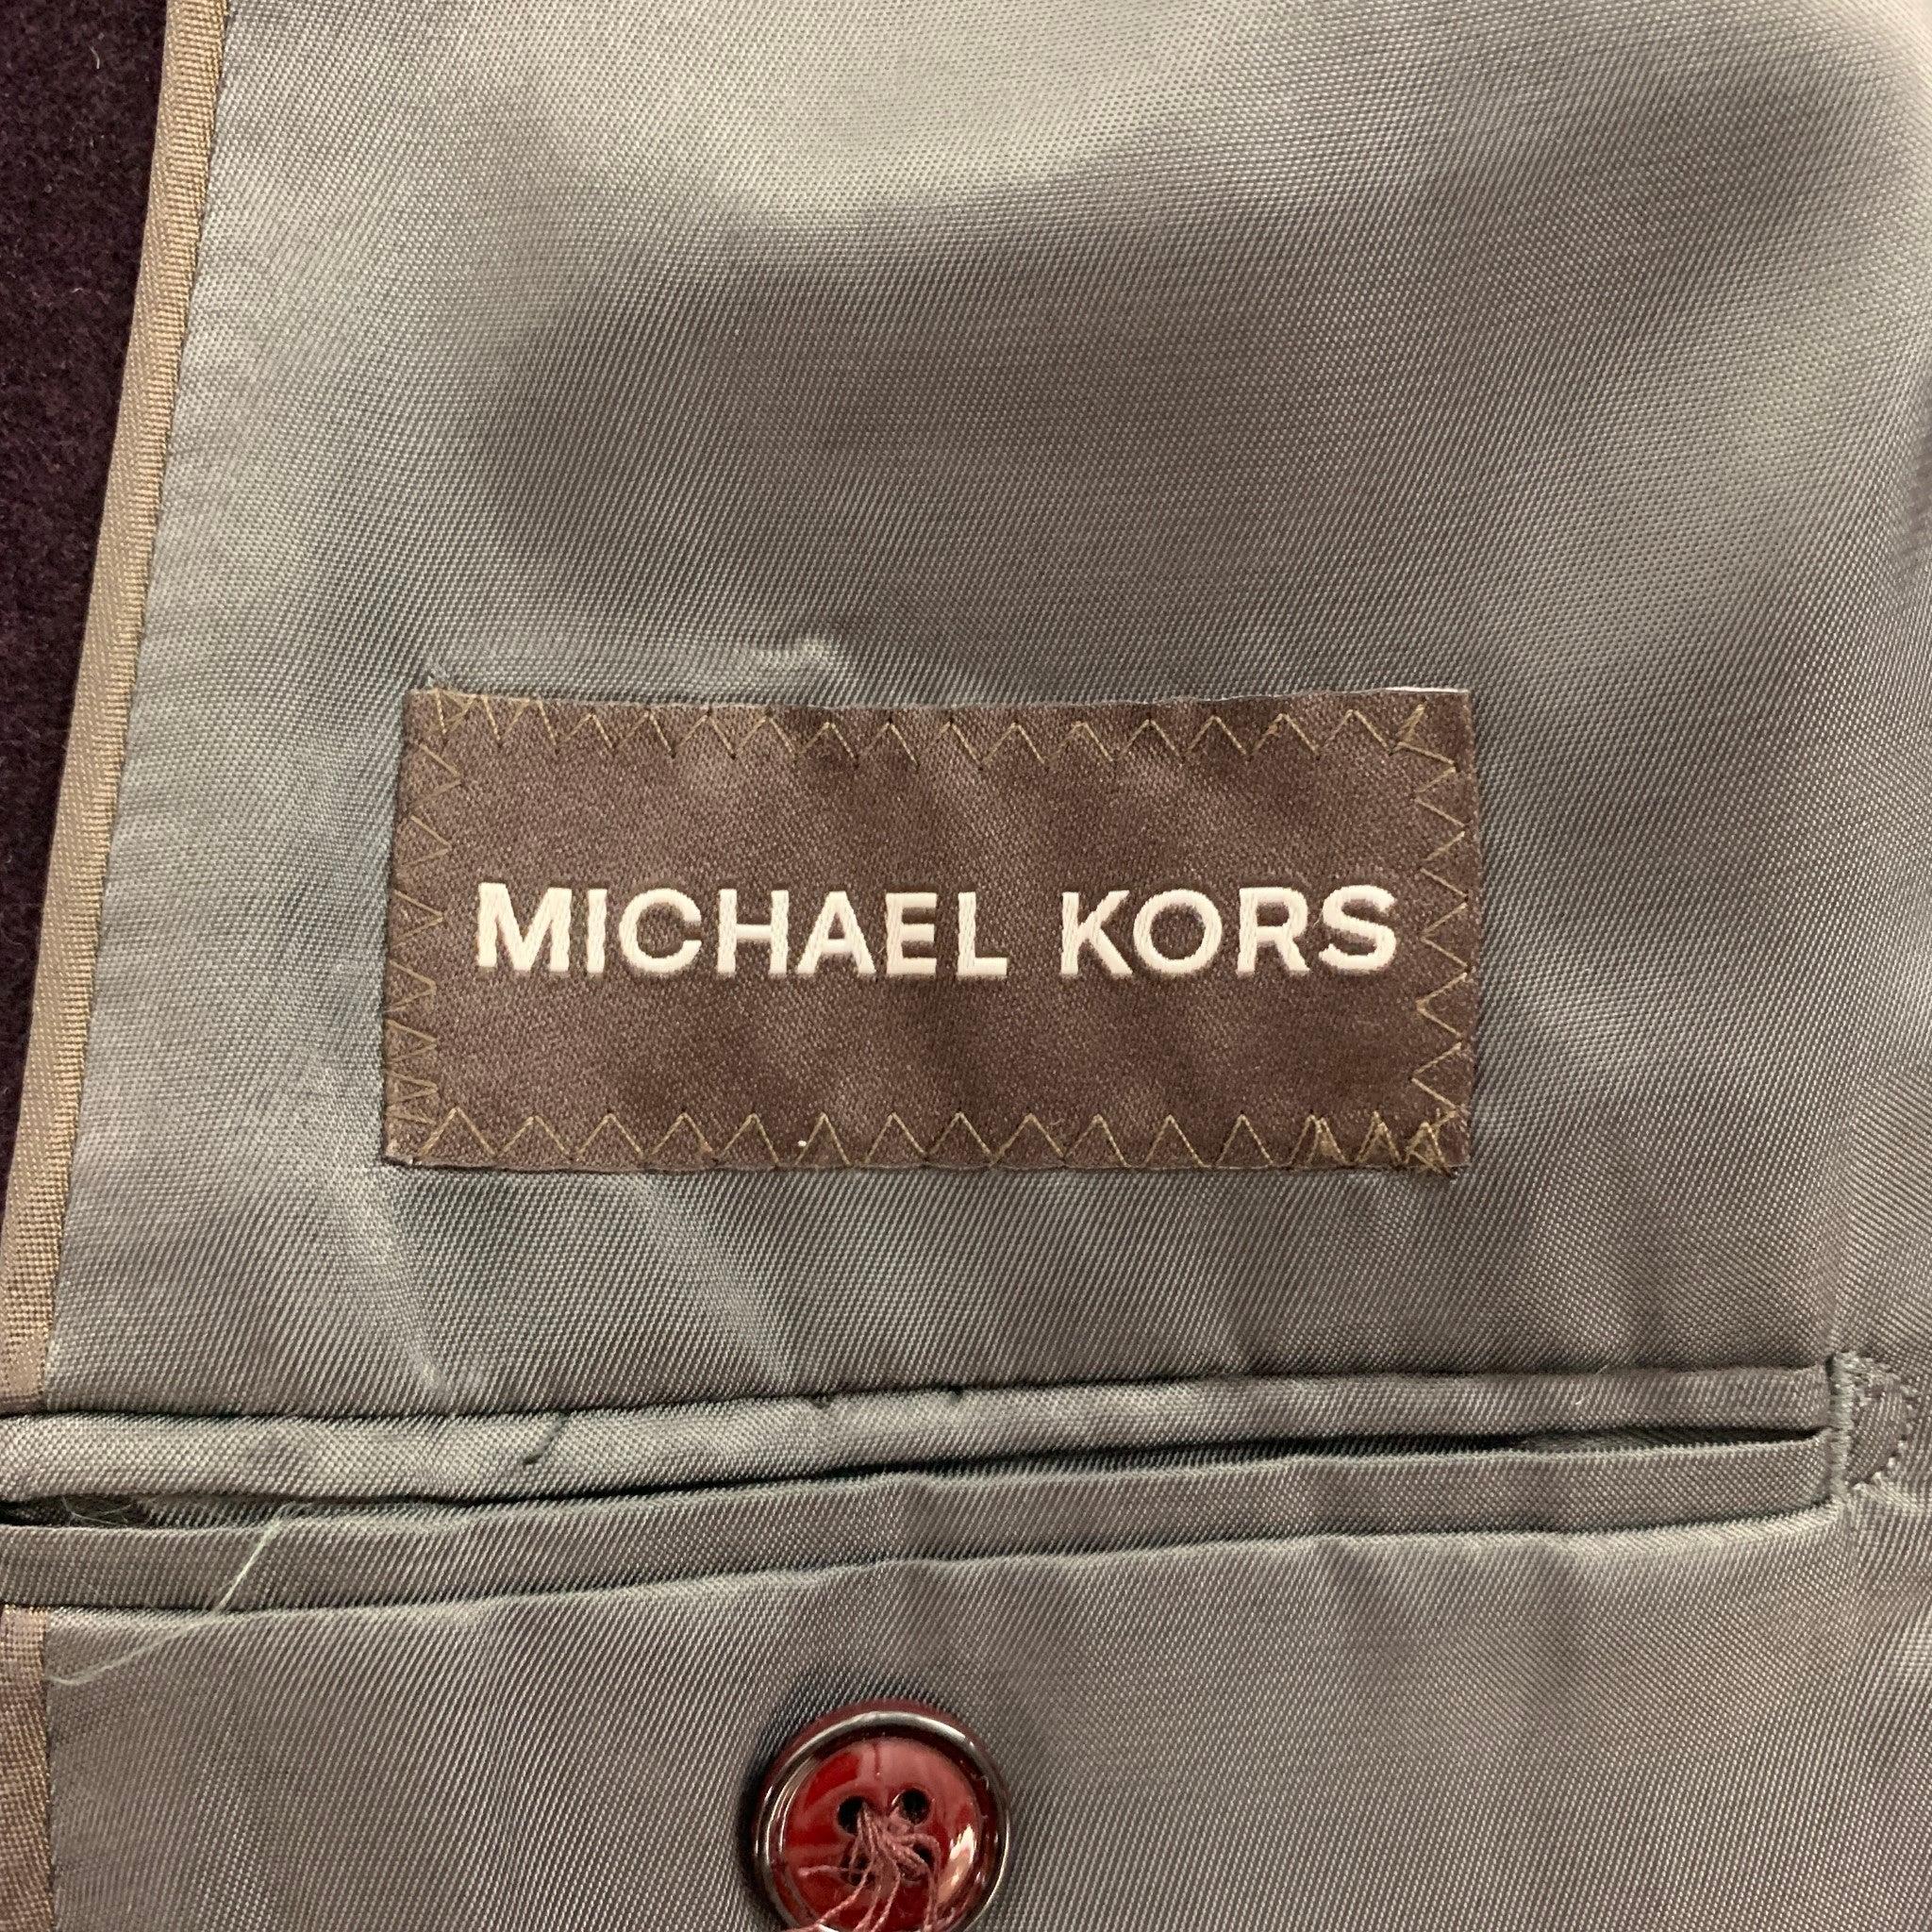 MICHAEL KORS Size 36 Purple Velvet Cotton Sport Coat For Sale 2